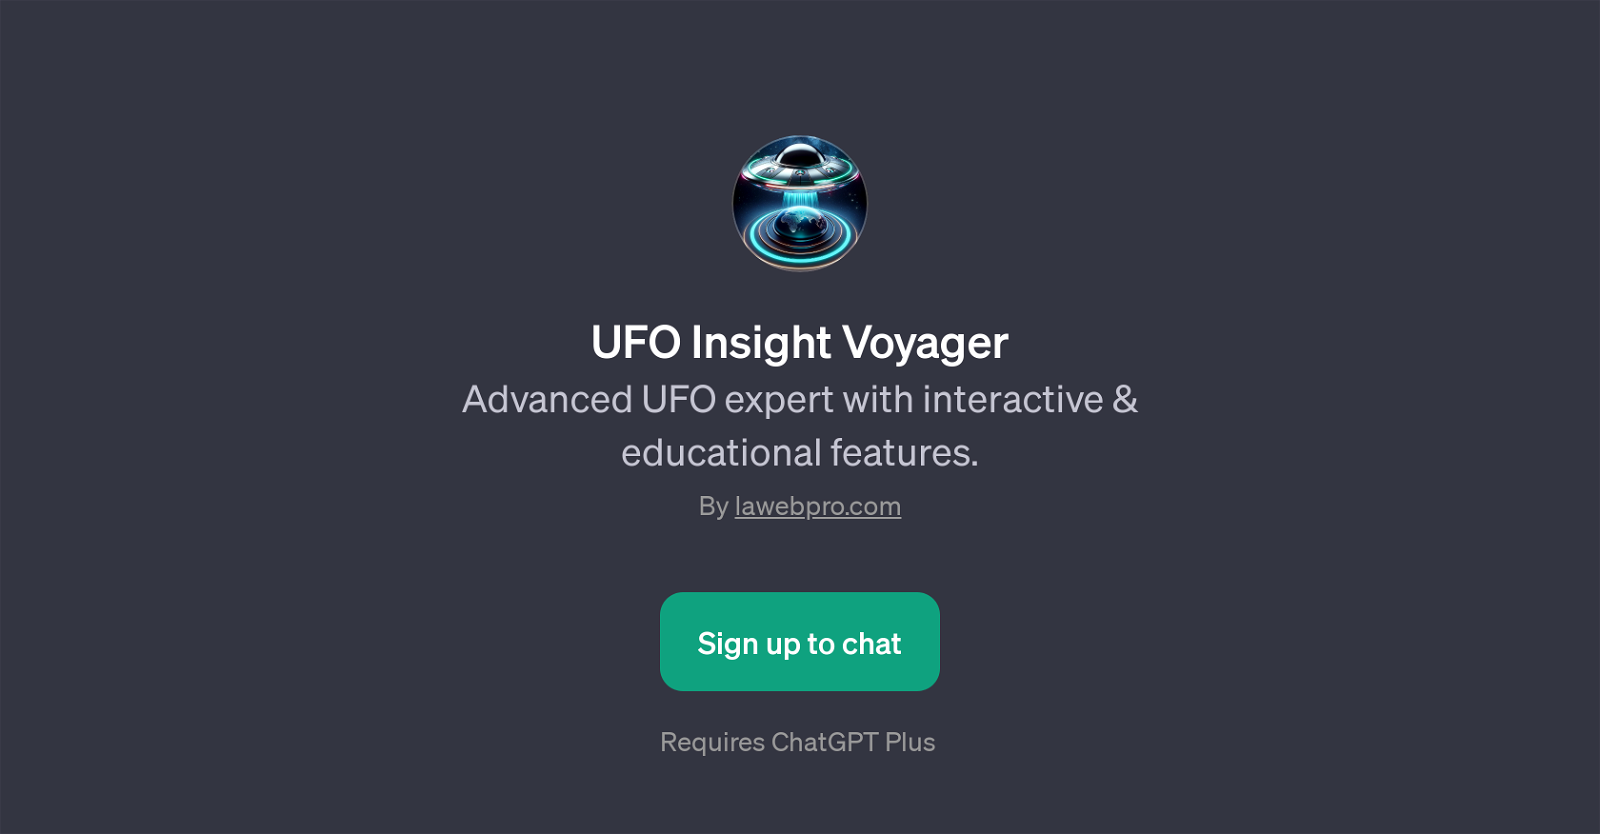 UFO Insight Voyager website